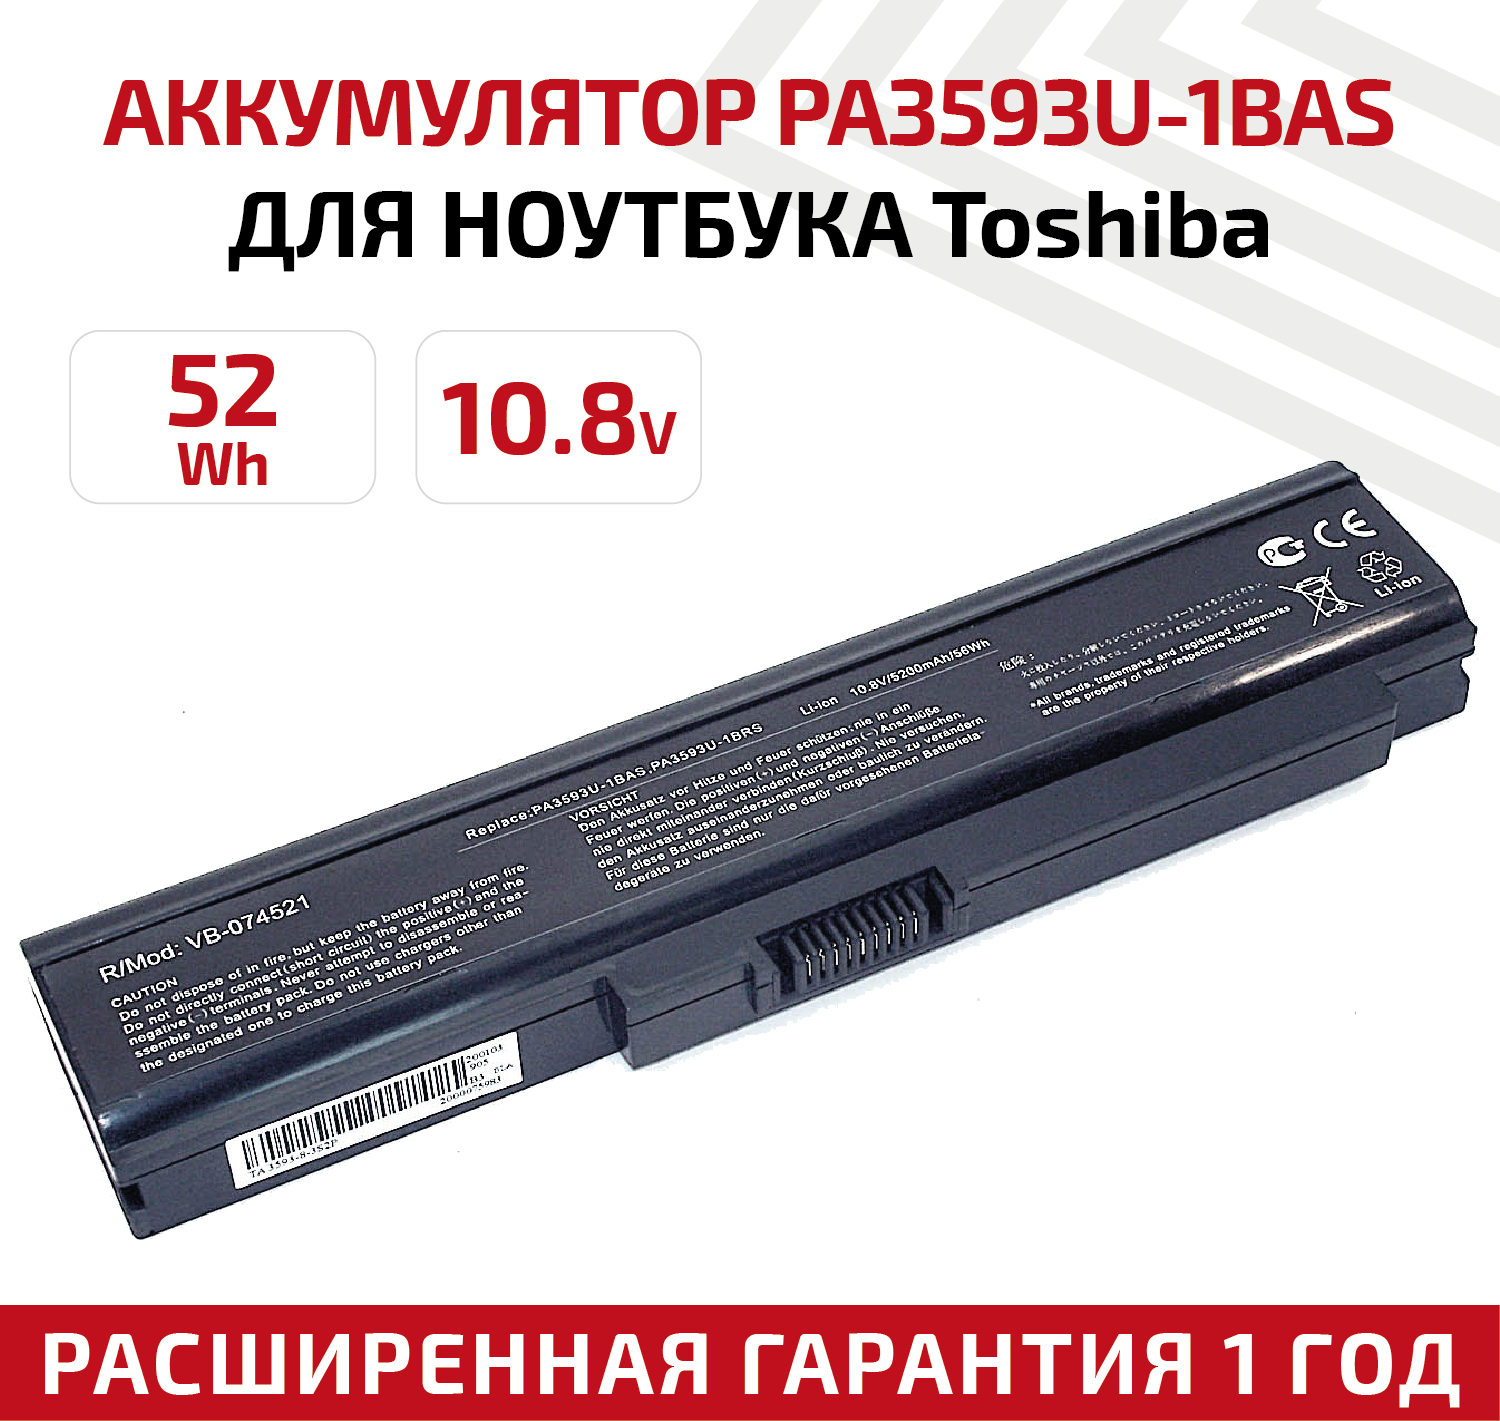 Аккумулятор (АКБ, аккумуляторная батарея) PA3593U-1BAS для ноутбука Toshiba Satellite Pro U300, 10.8В, 52Вт, 5200мАч, черный